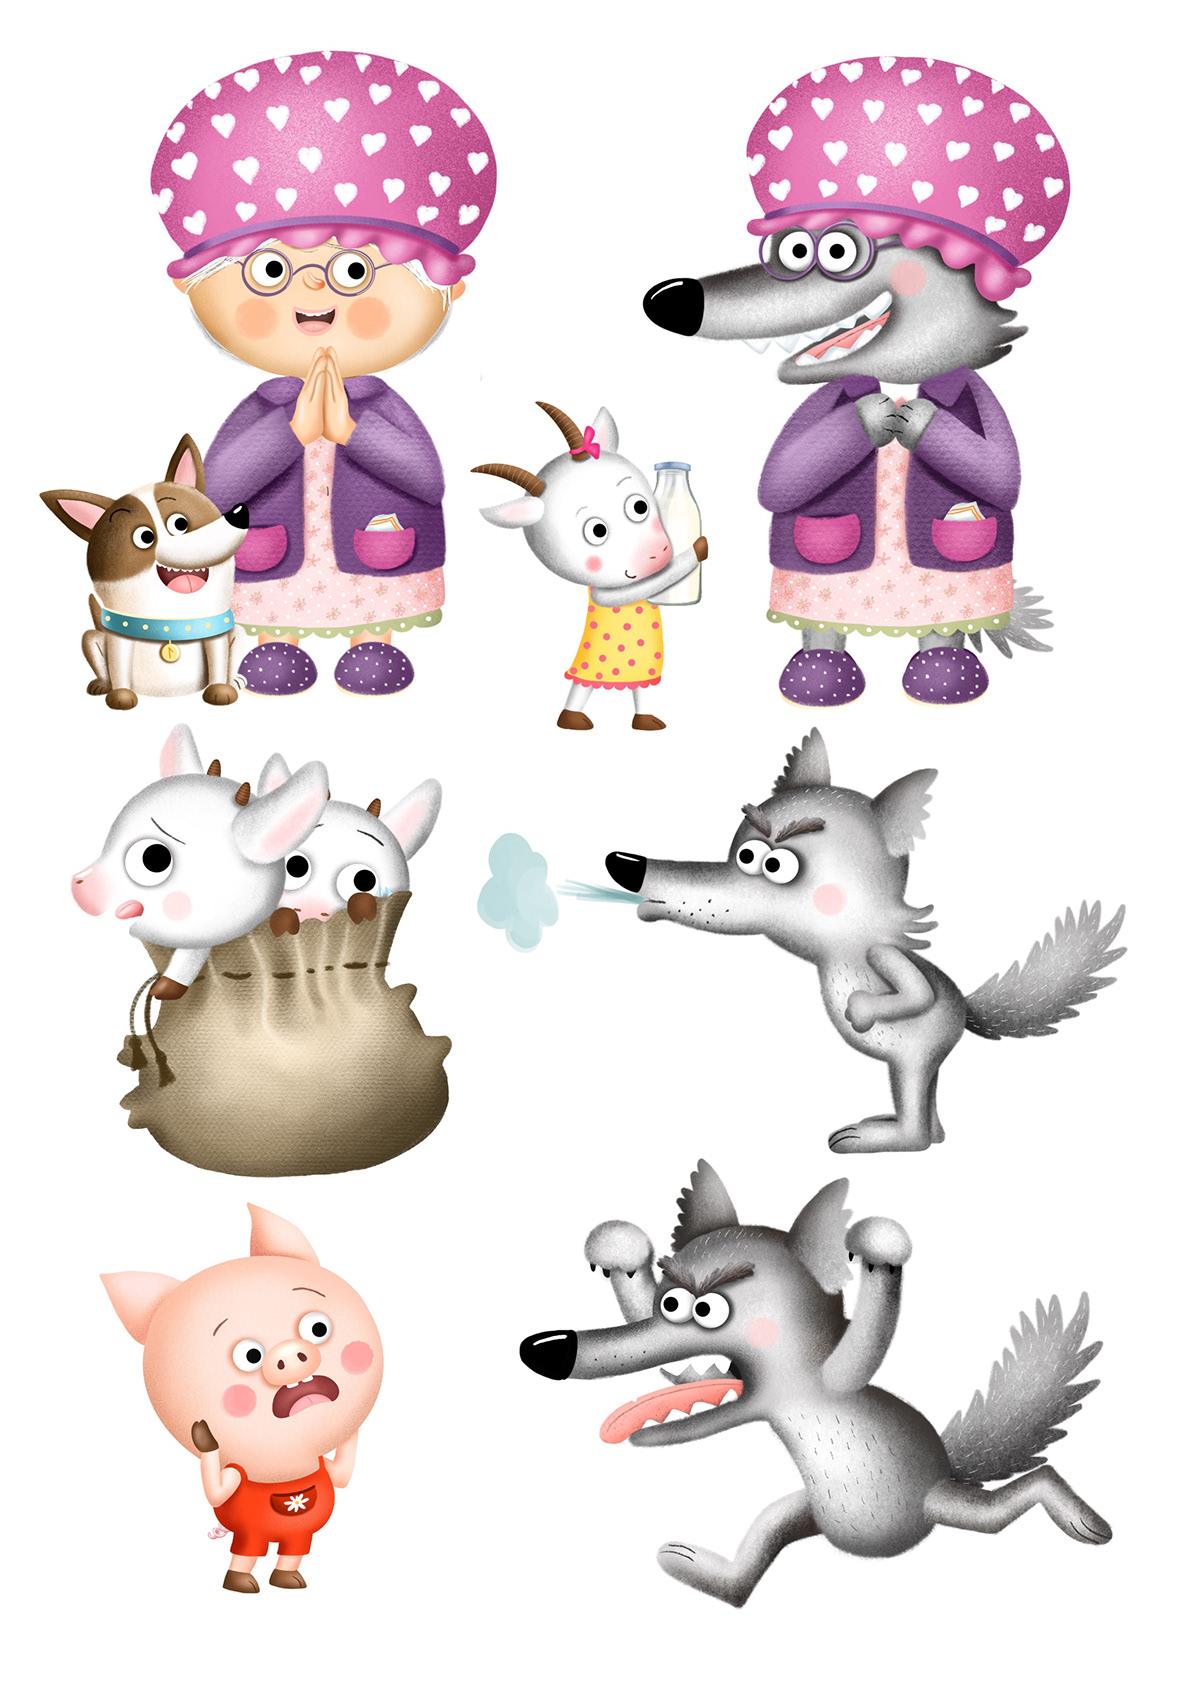 animalillustration animals Character children illustration cuteanimals fairytale house pig puzzle wolf